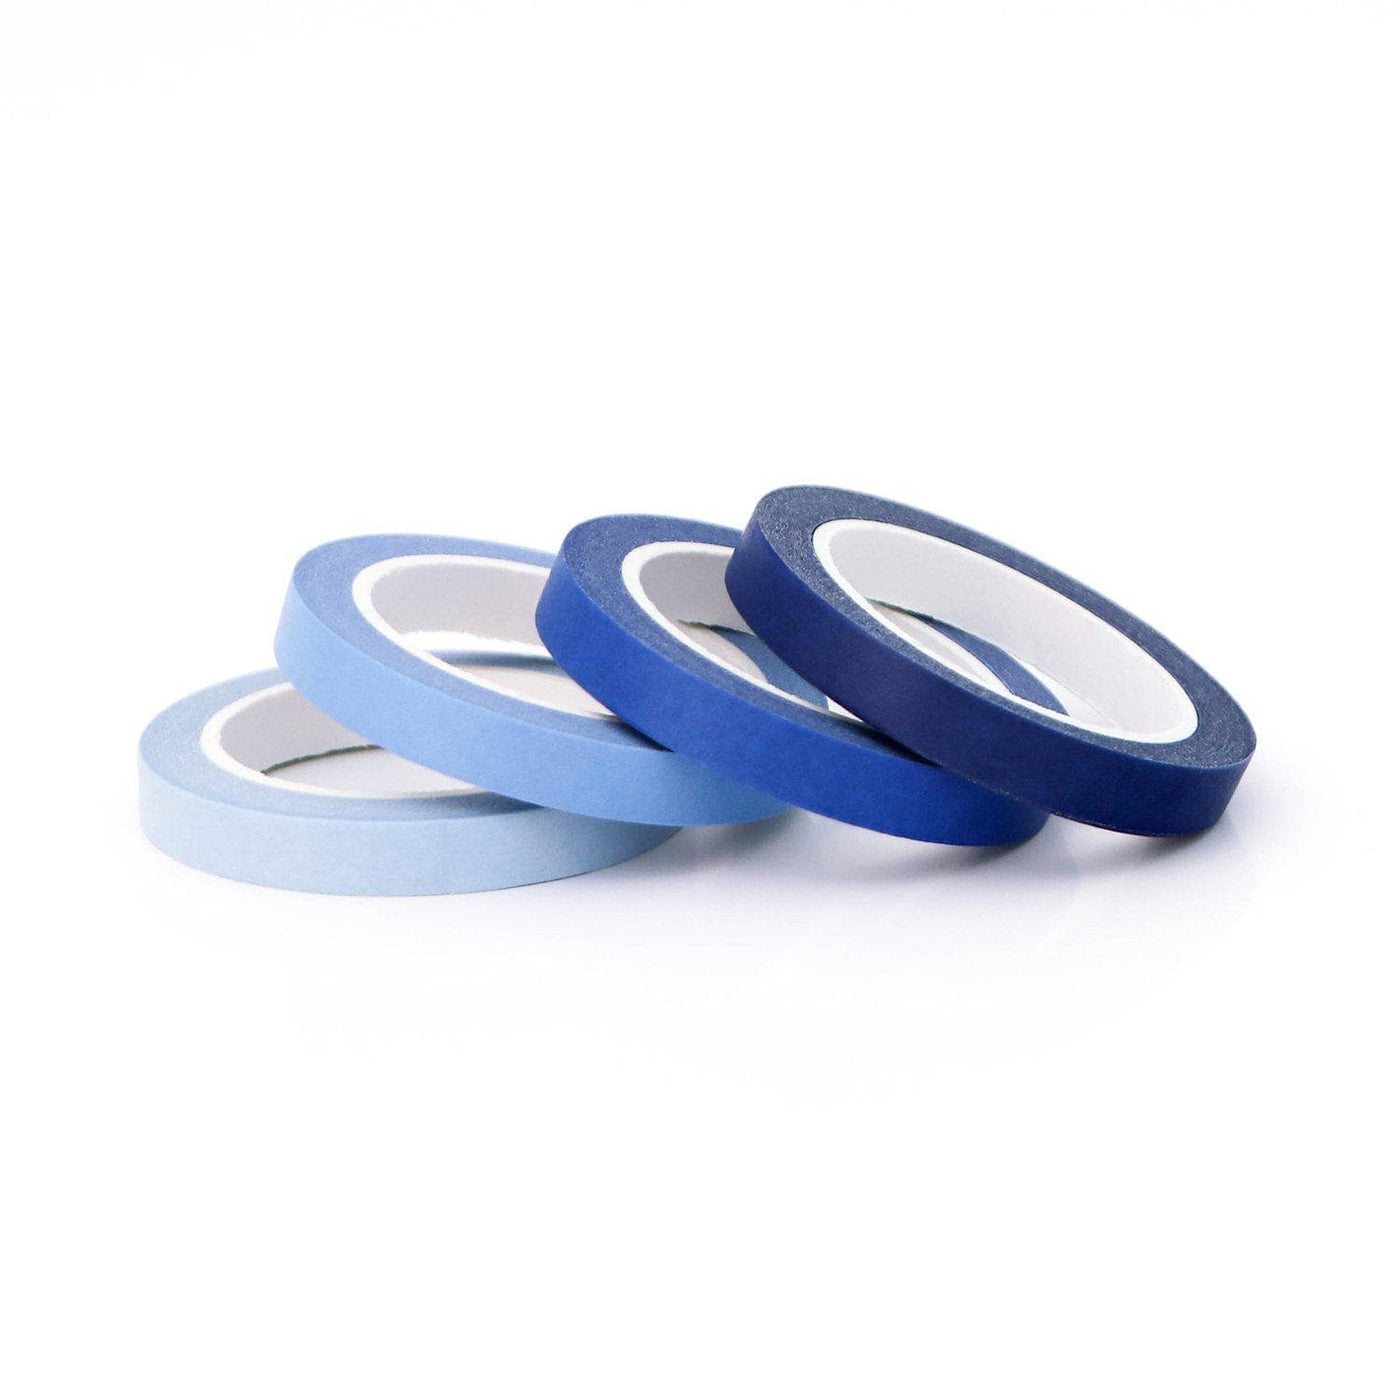 XF Tape Washi Tapes Lapis Lazuli Slim Washi Tape Set